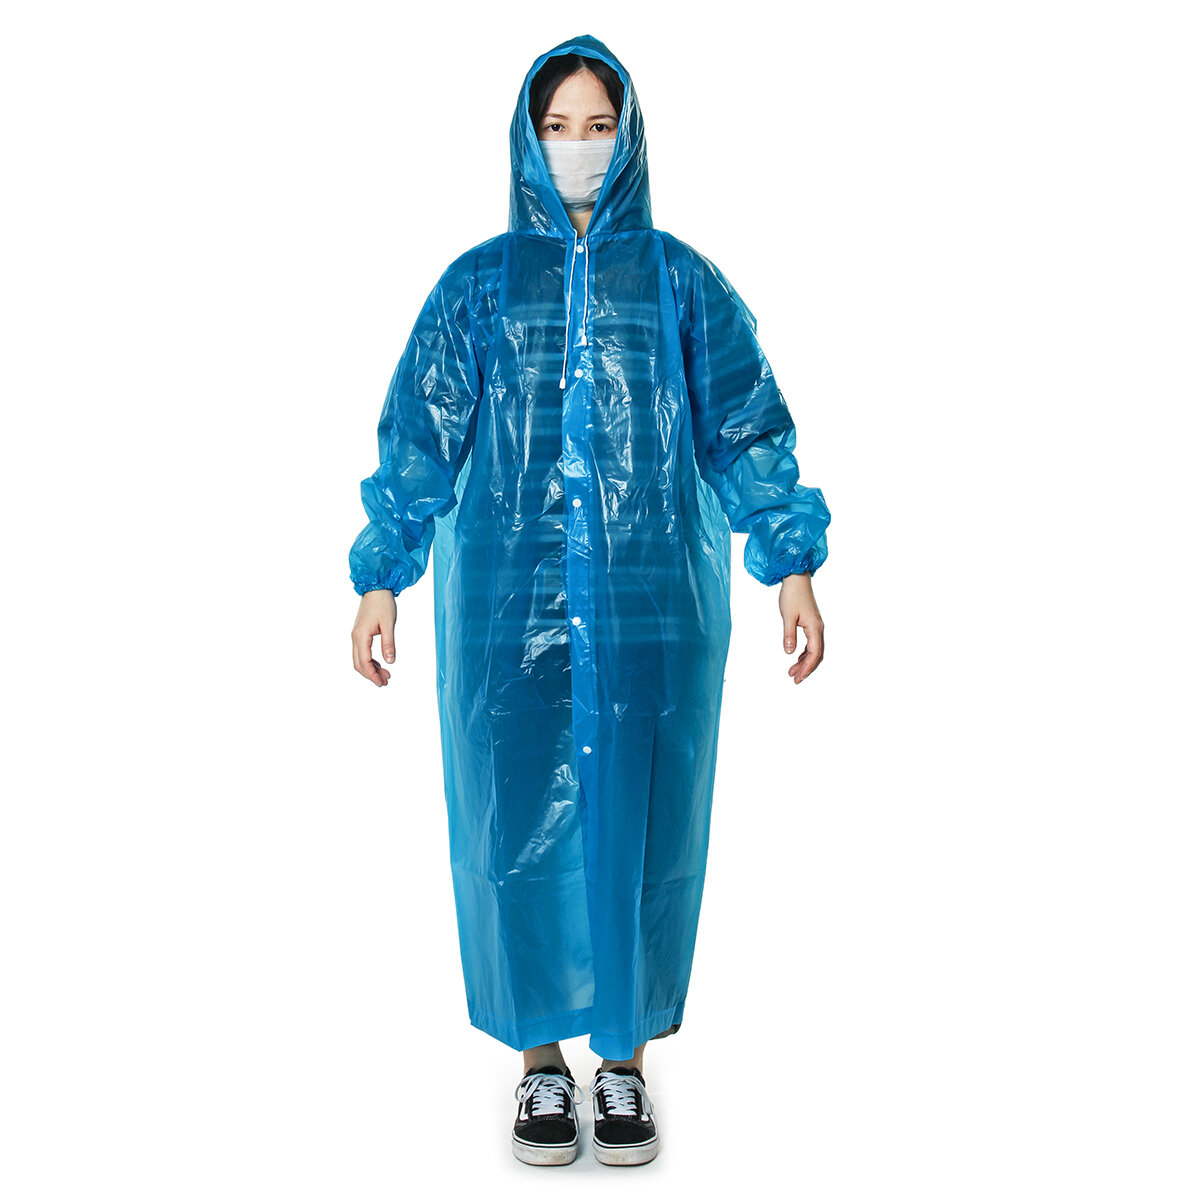 Adult Waterproof Jacket Raincoat Rain Coat Hooded Poncho Camping Hiking Rainwear